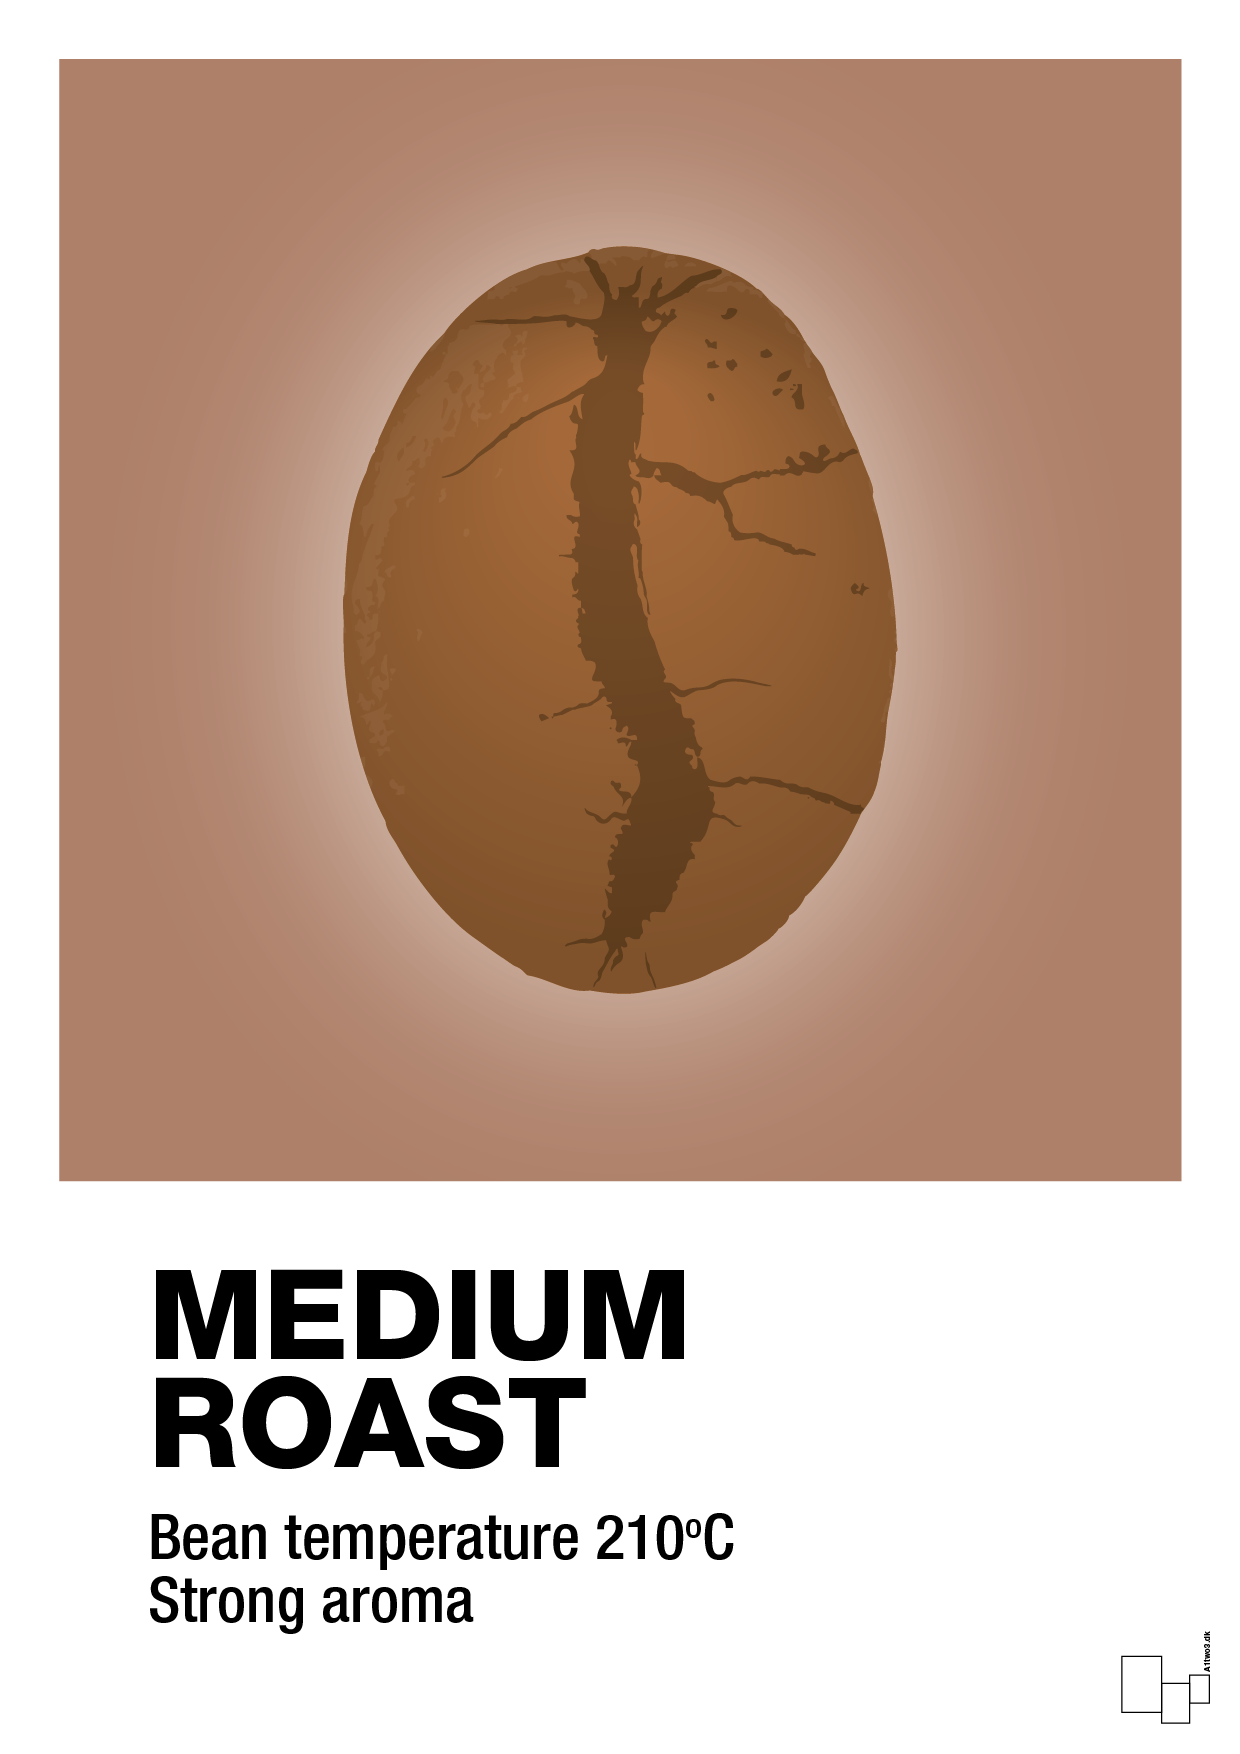 medium roast - Plakat med Mad & Drikke i Cider Spice